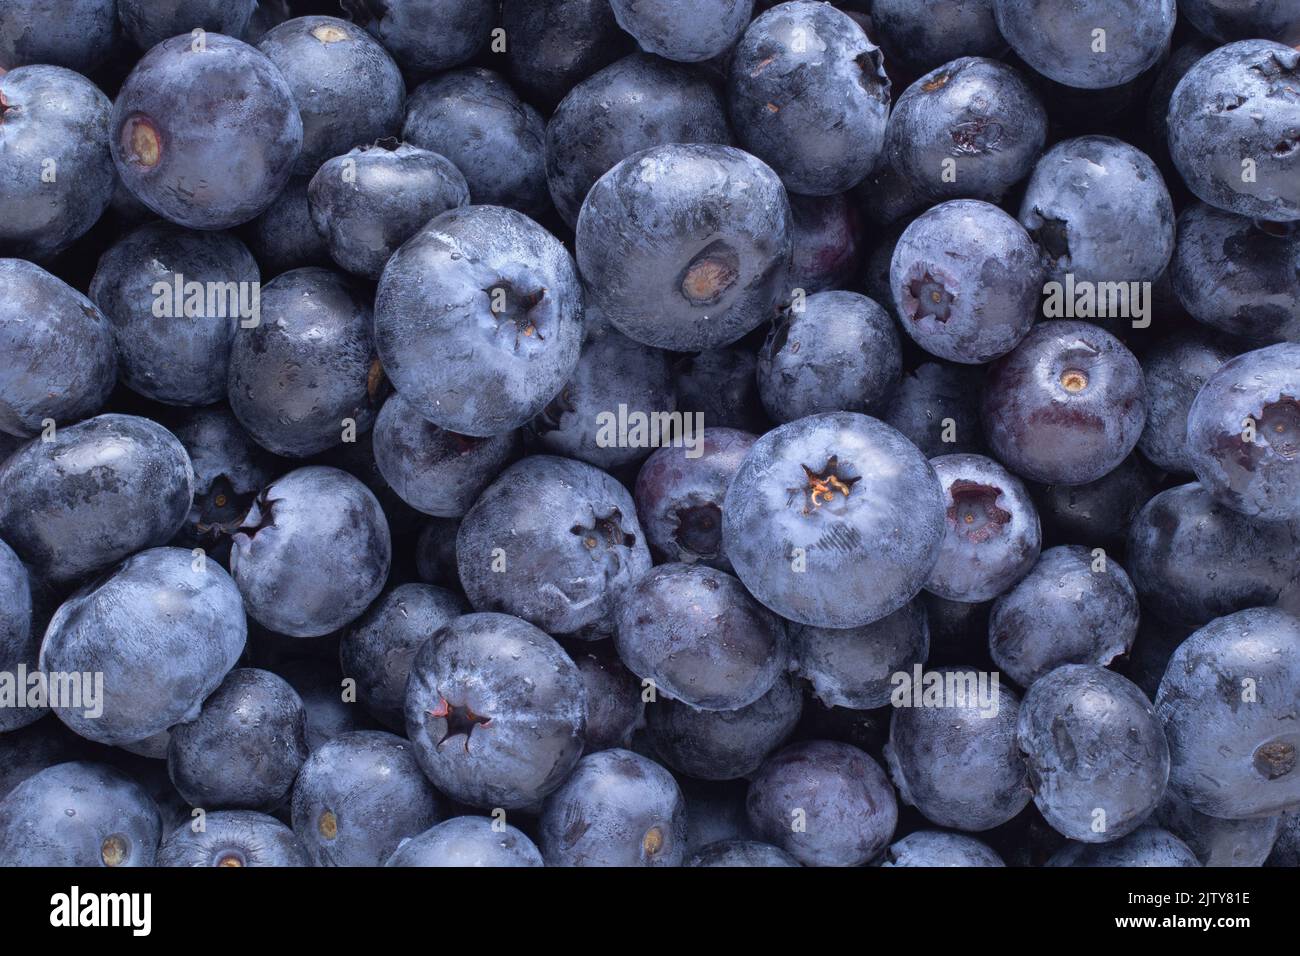 Closeup view of fresh blueberries Stock Photo